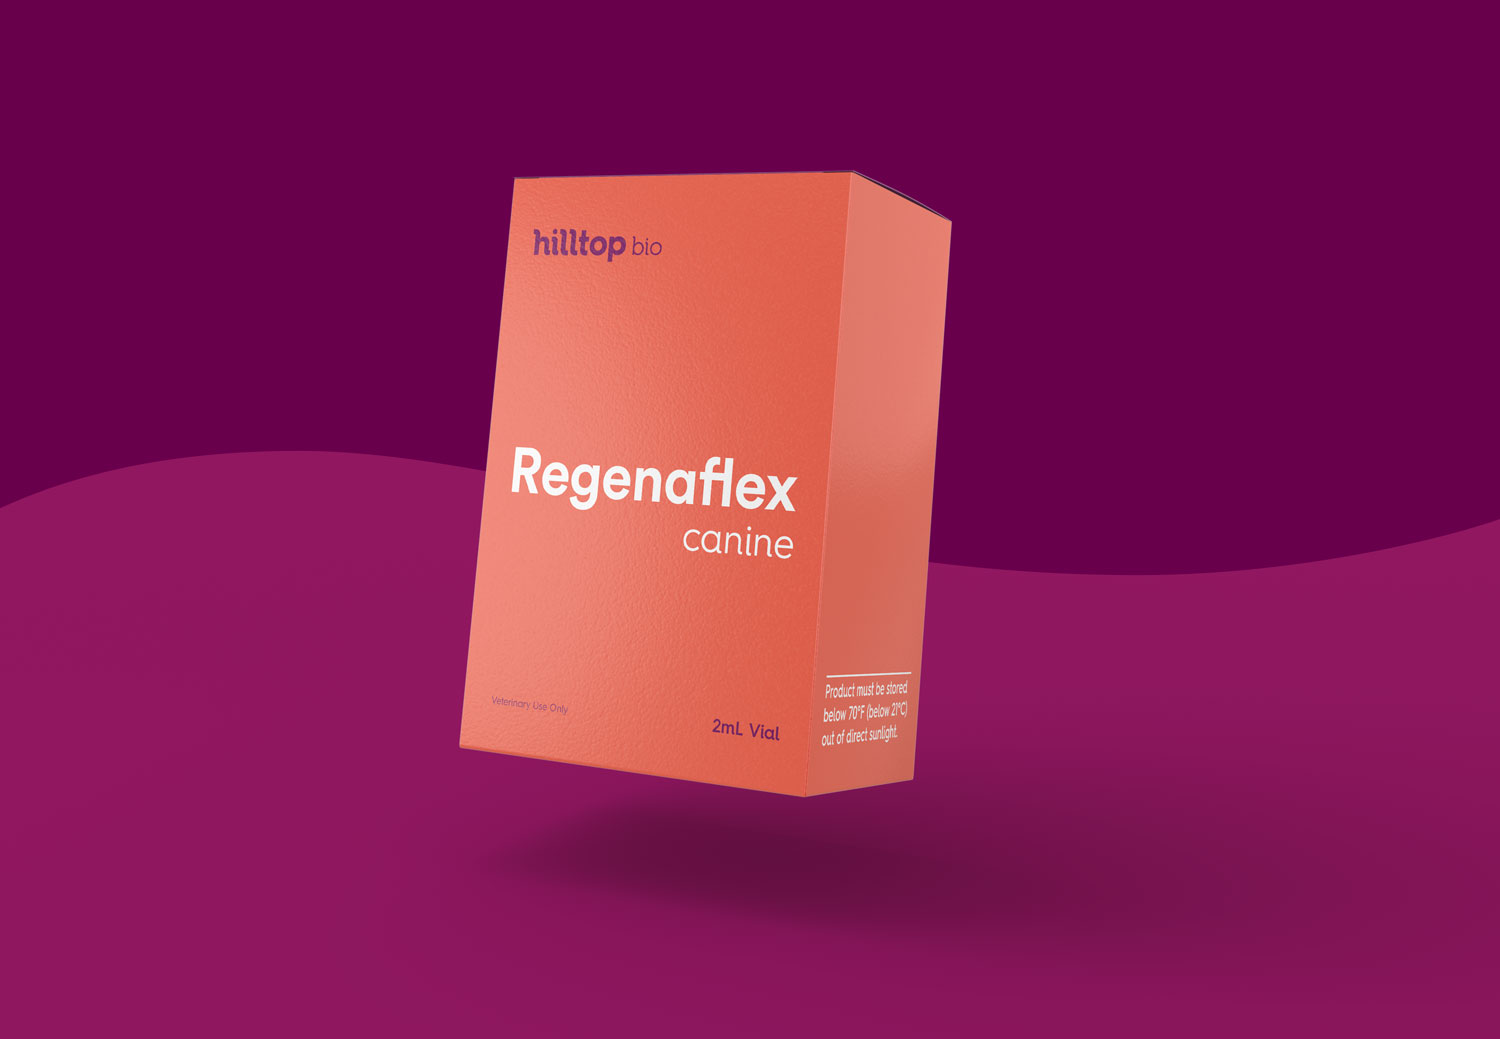 Regenaflex canine product packaging mockup